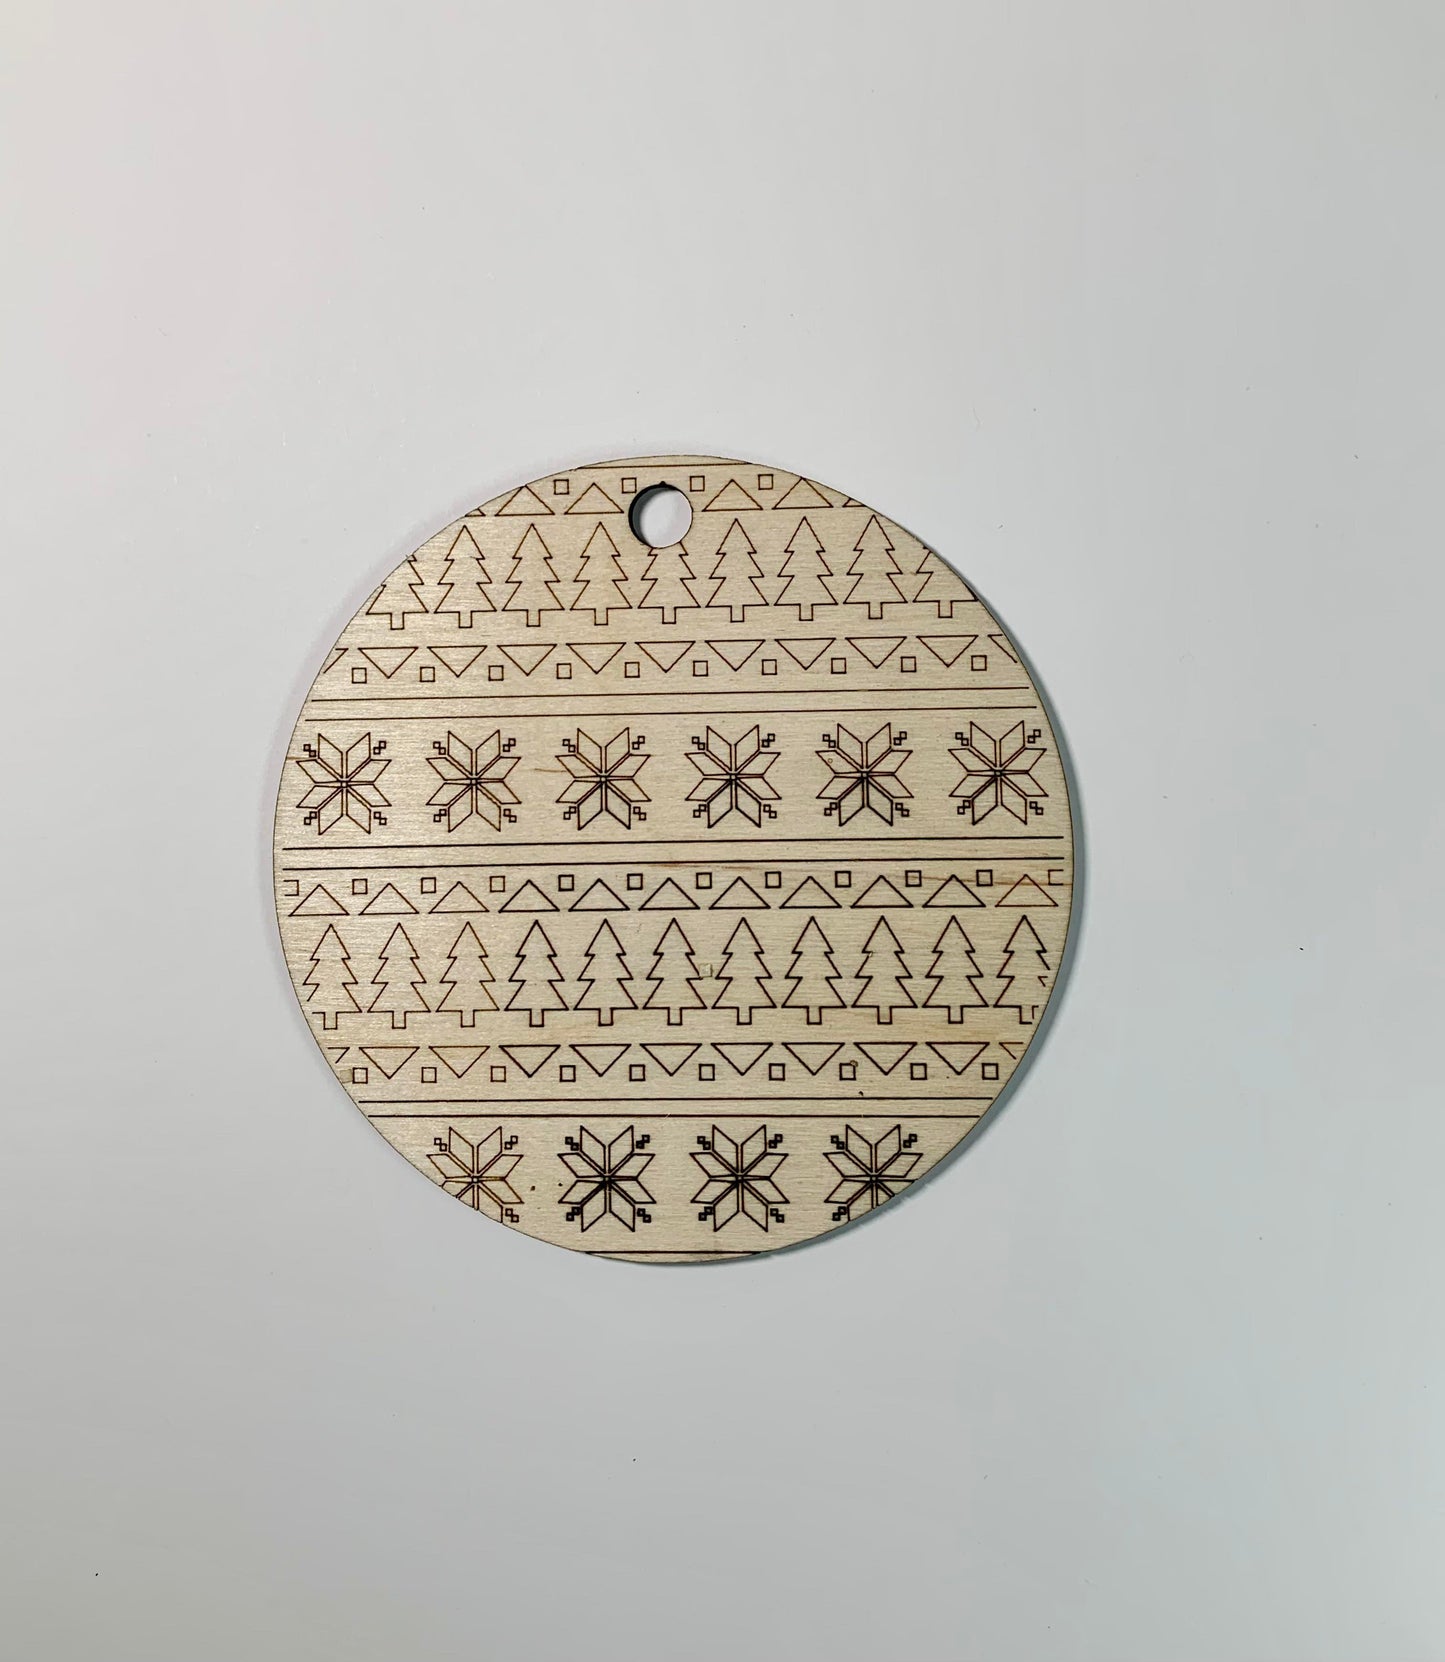 Sweater pattern ornament - Creative Designs By Kari